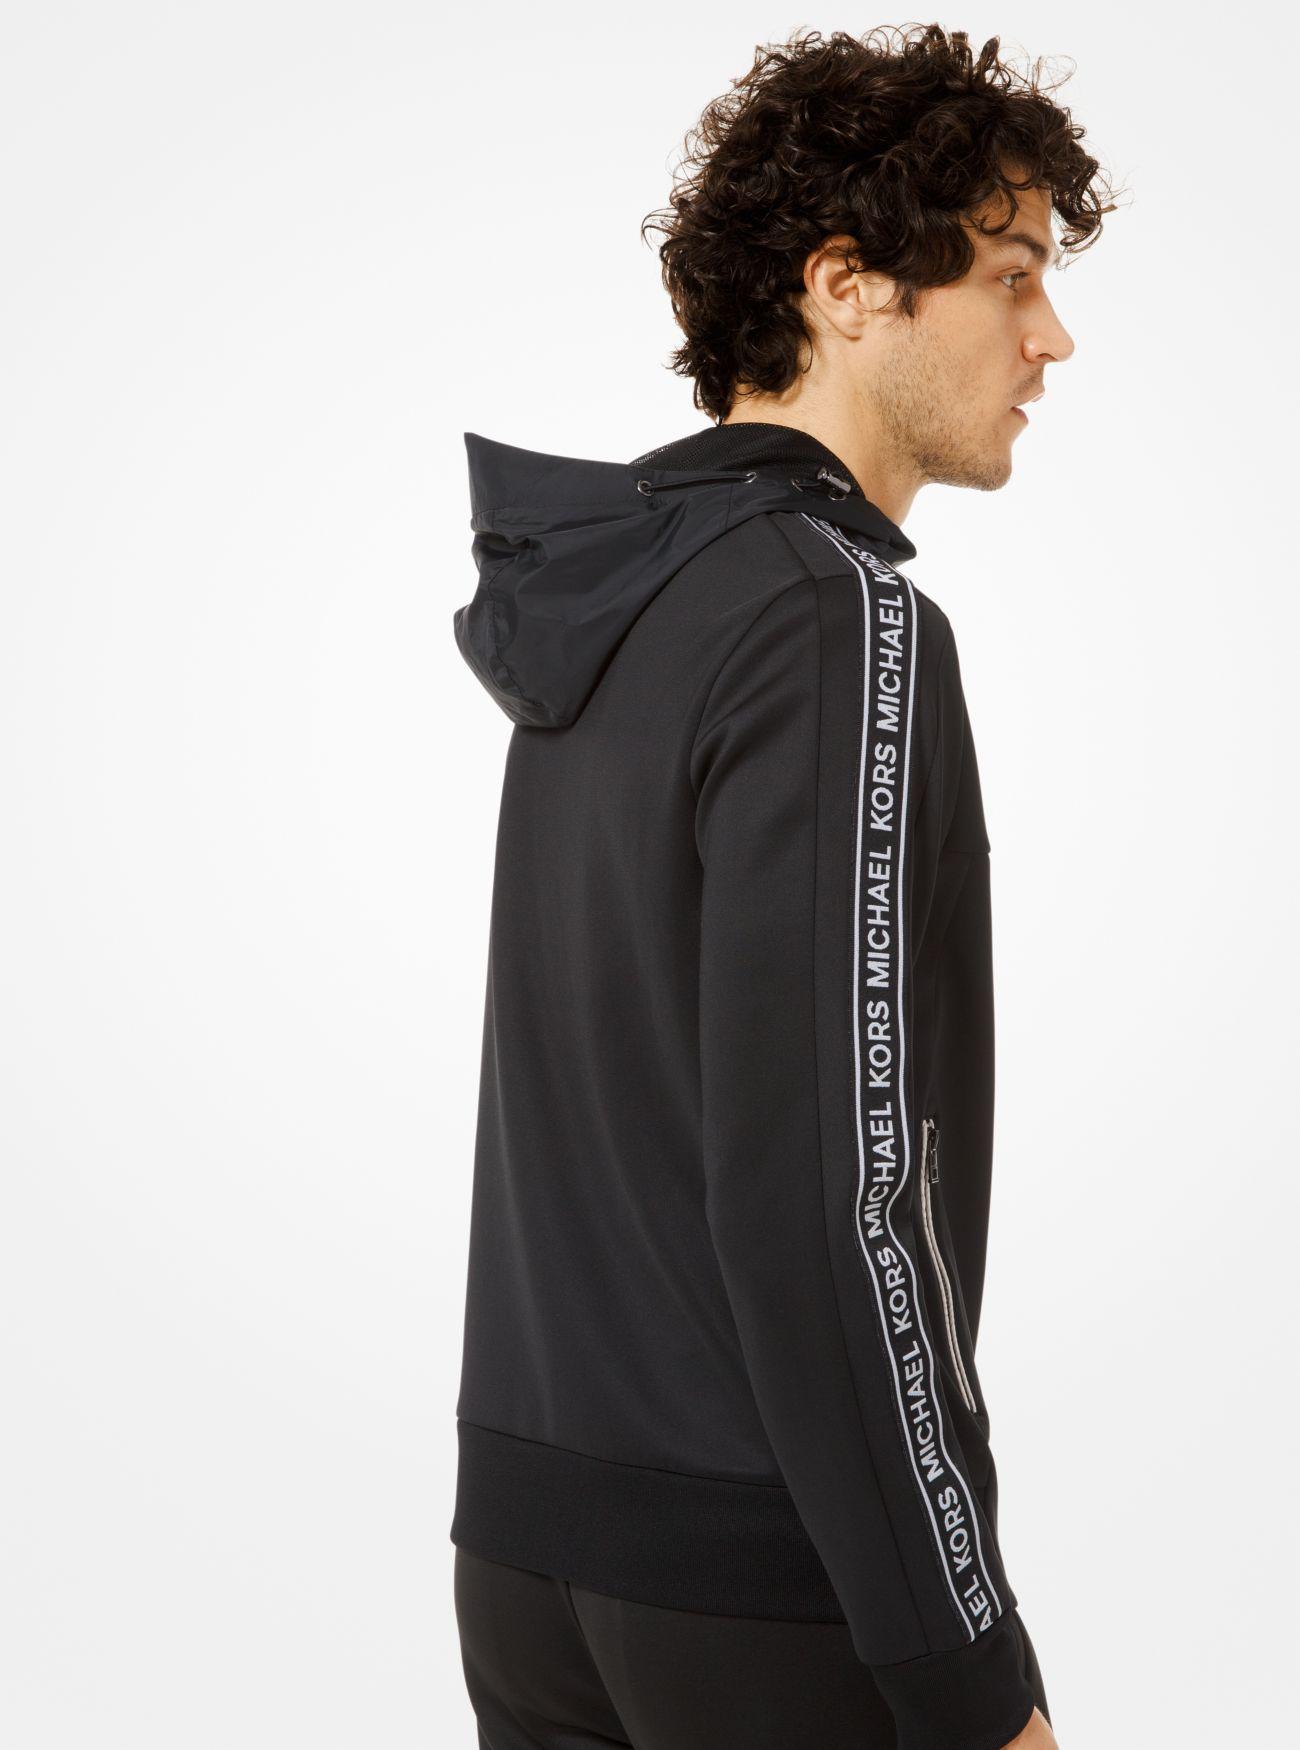 Michael Kors Synthetic Logo Tape Scuba Zip-up Hoodie in Black for Men - Lyst